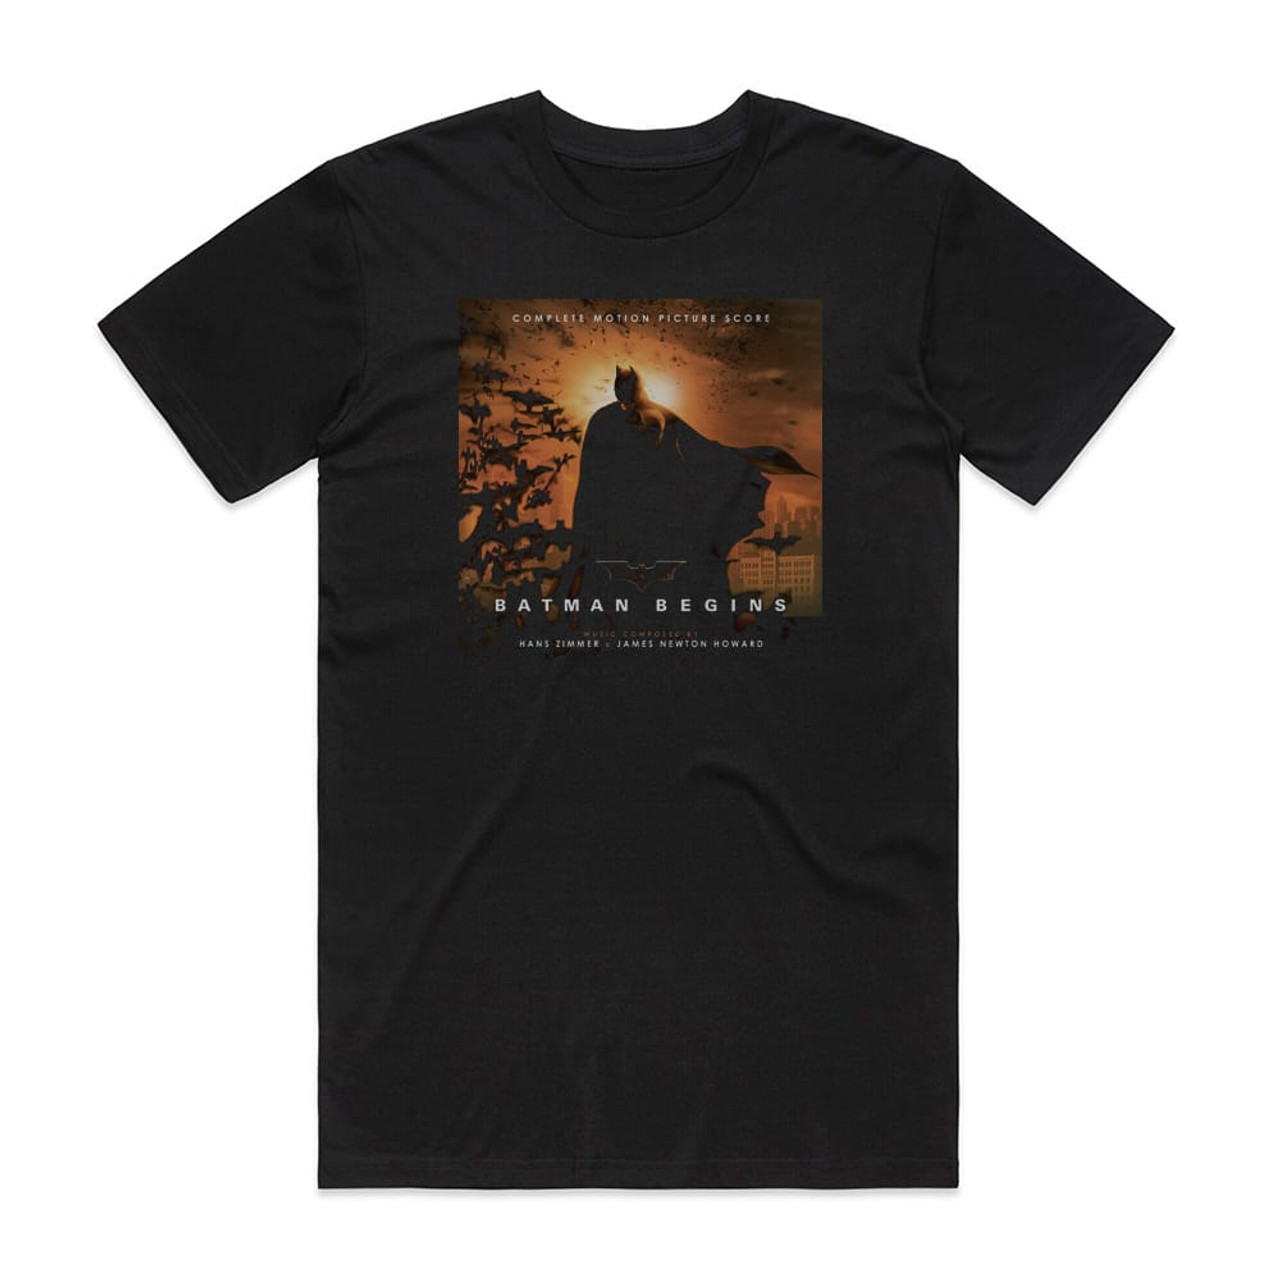 Hans Zimmer Batman Begins 1 Album Cover T-Shirt Black